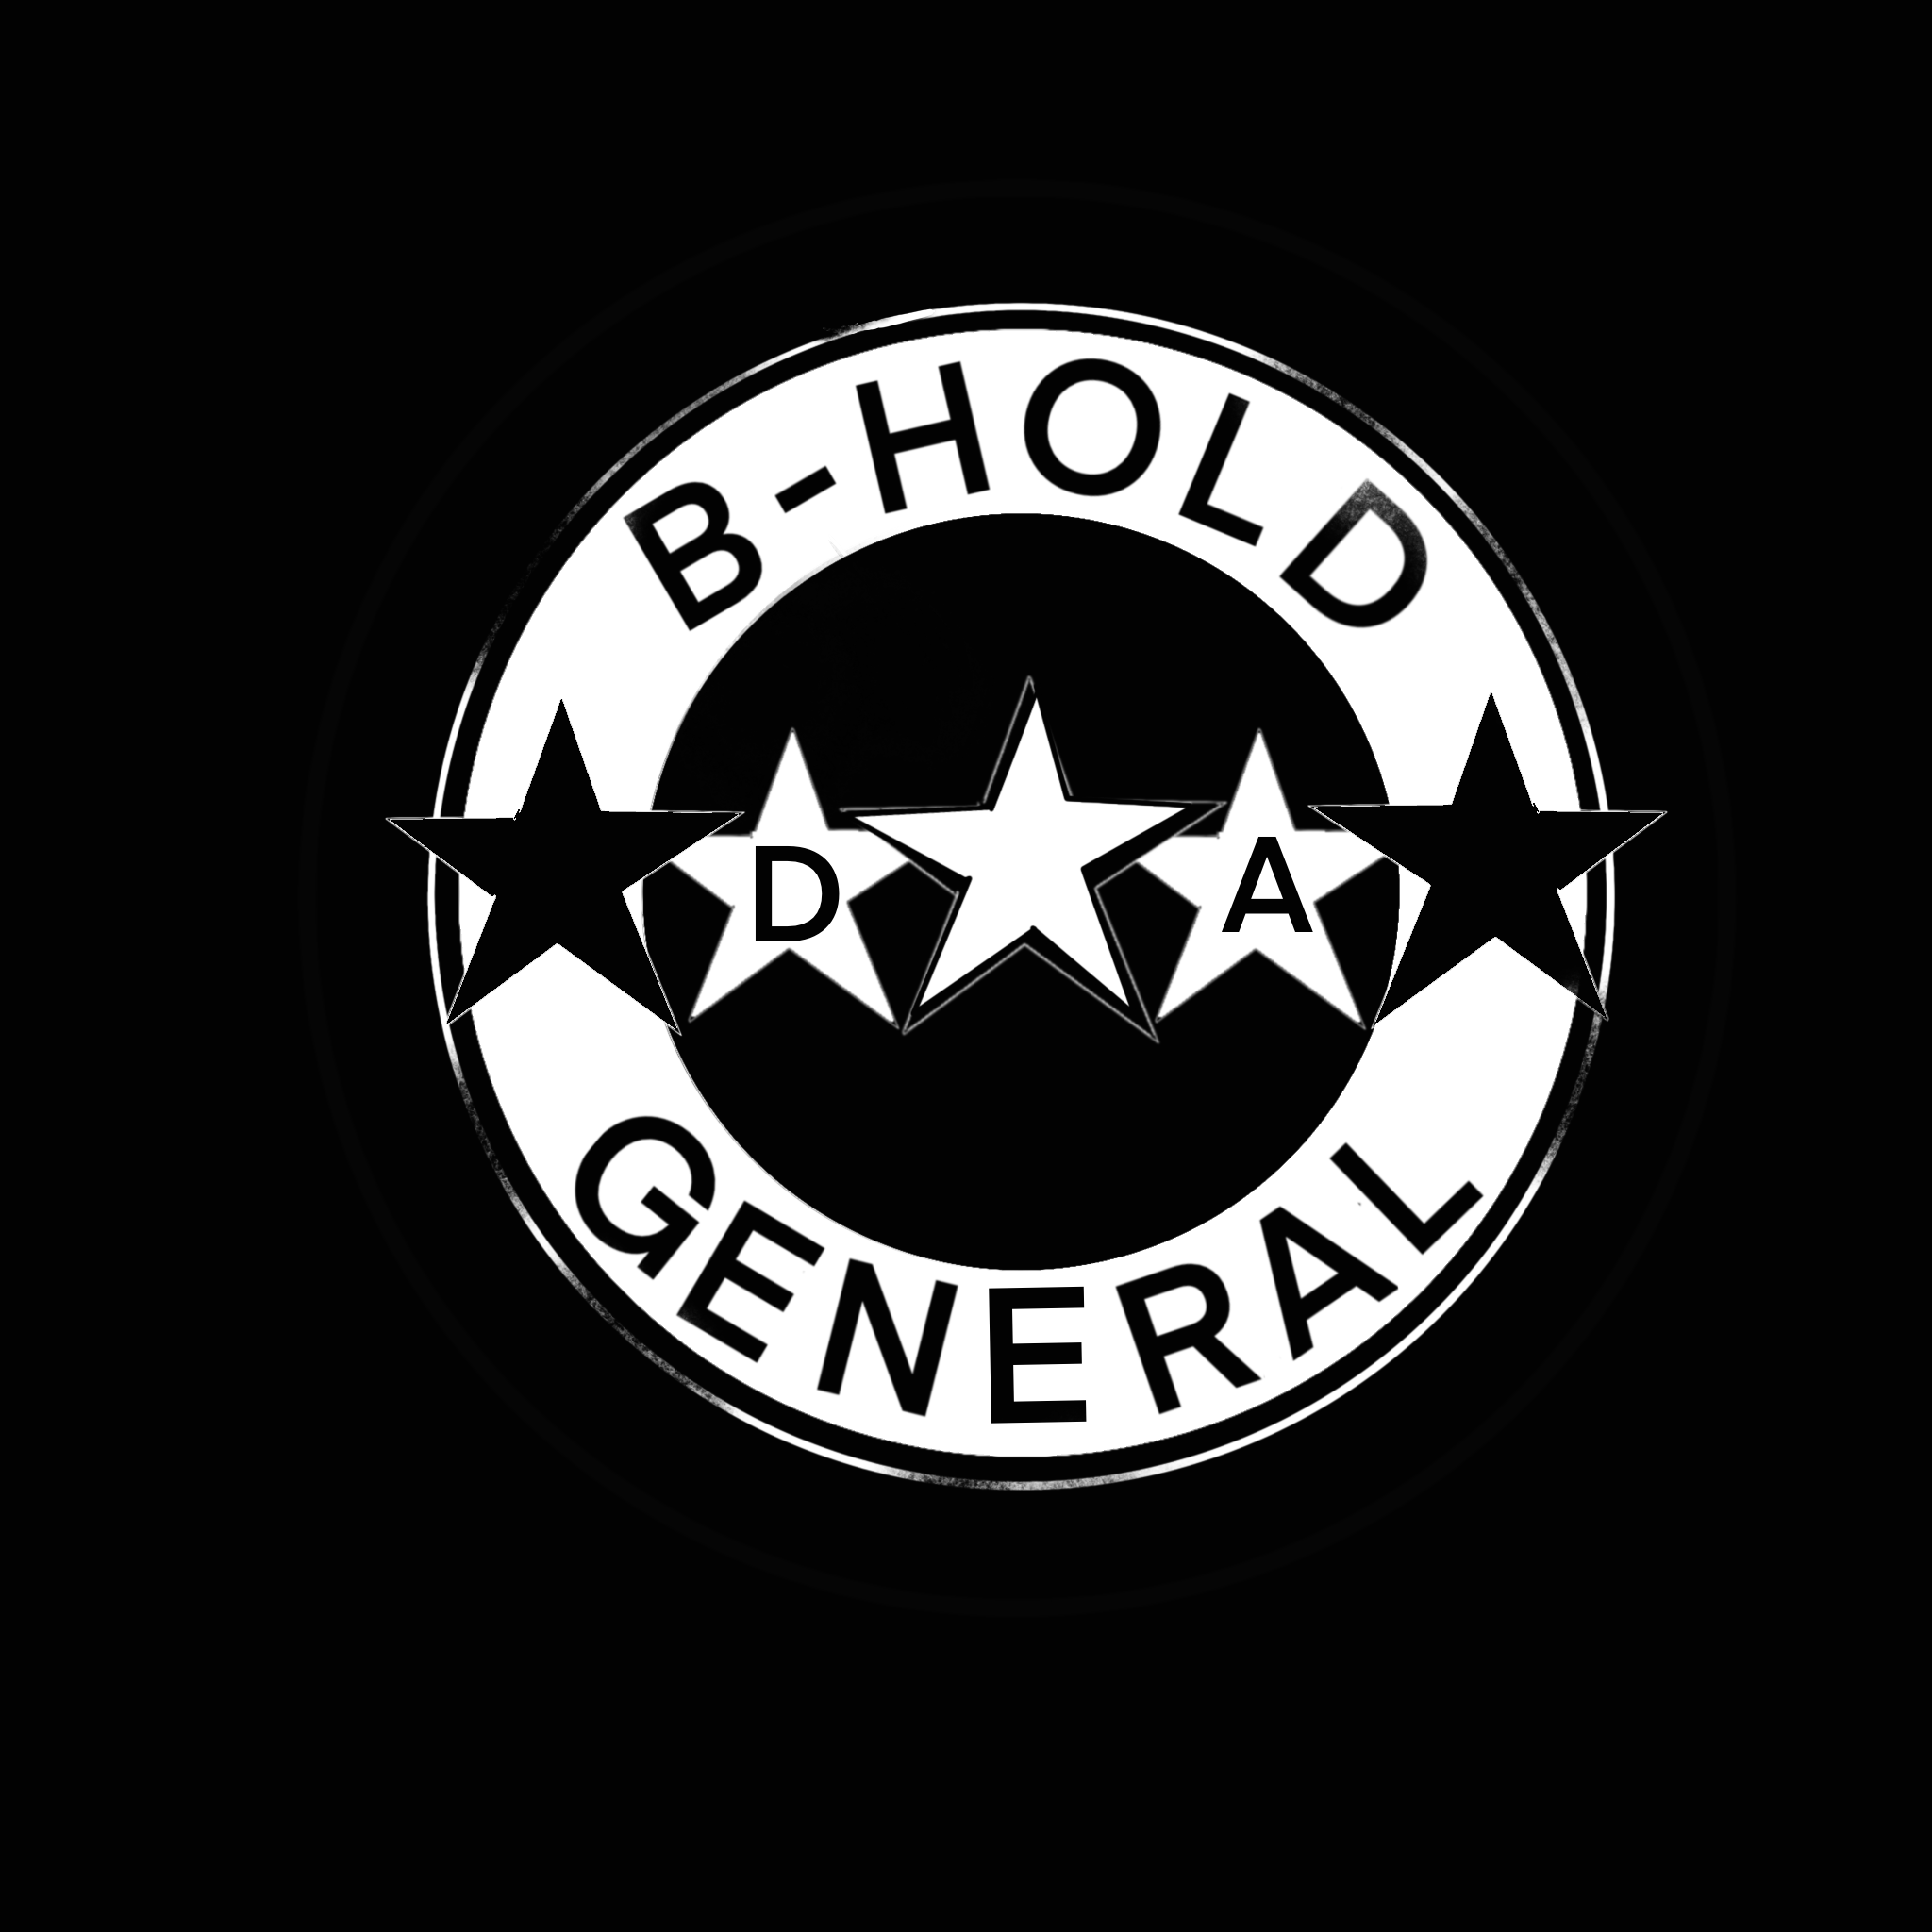 B-Hold da General